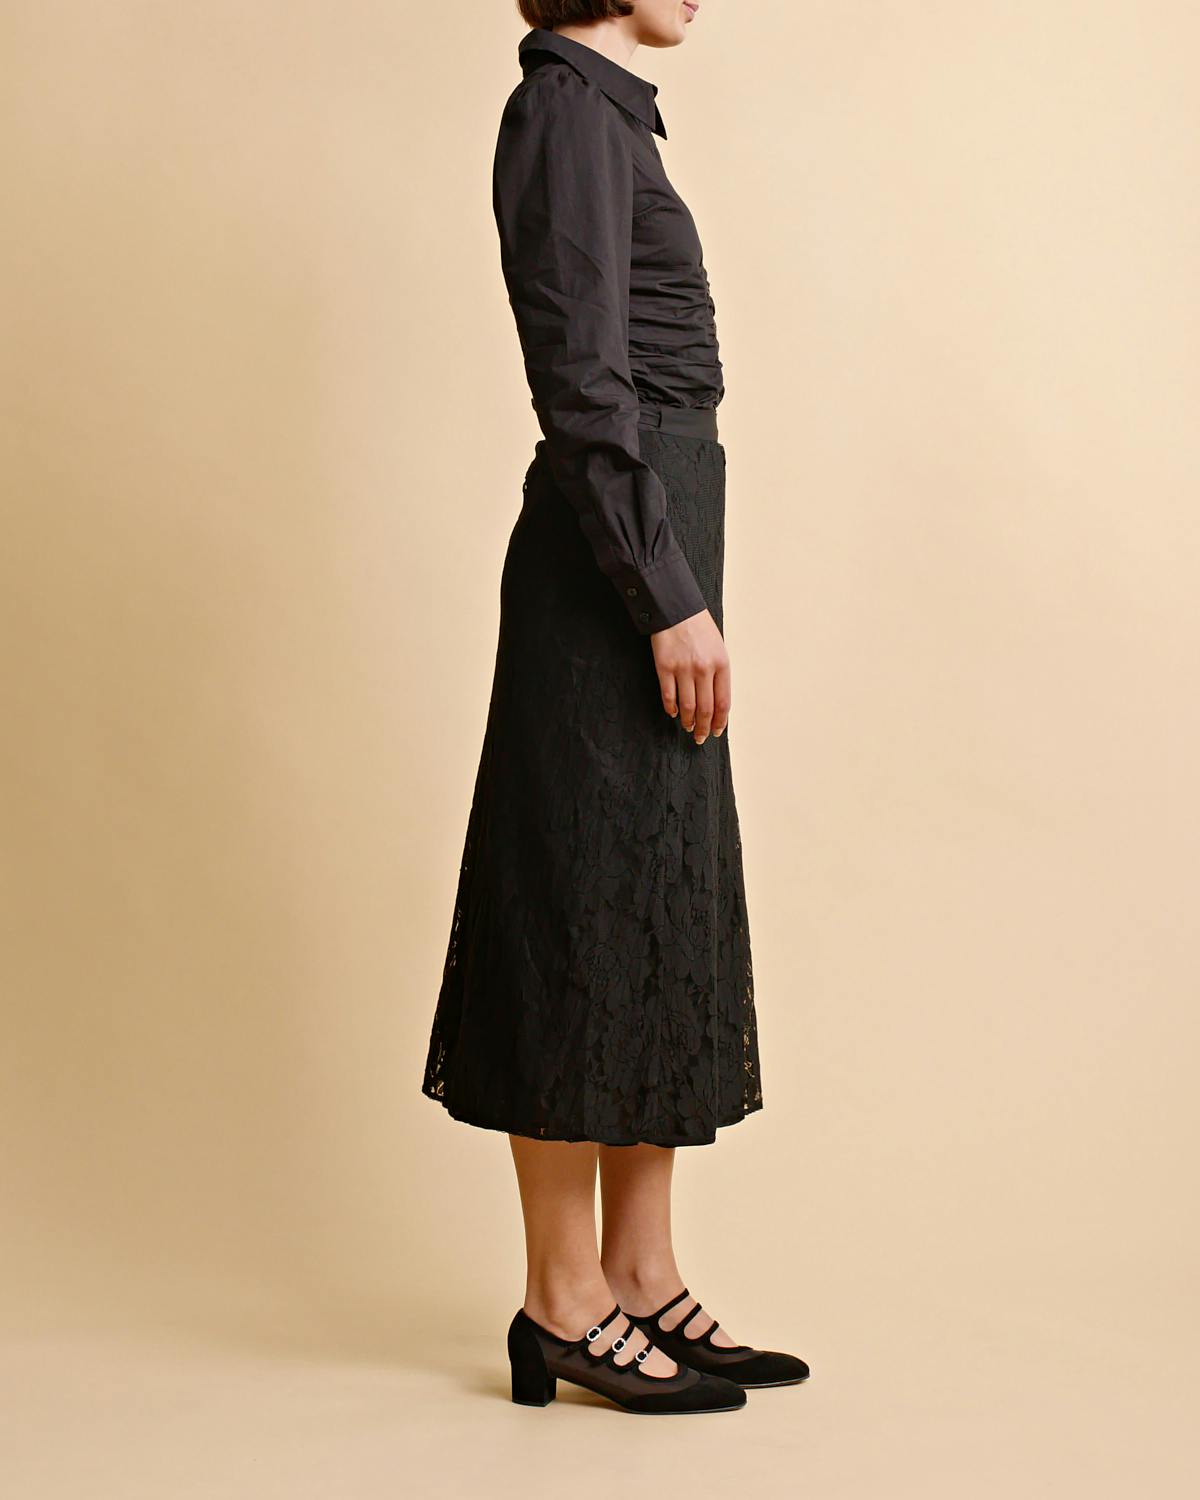 Lace Skirt, Black. Image #3